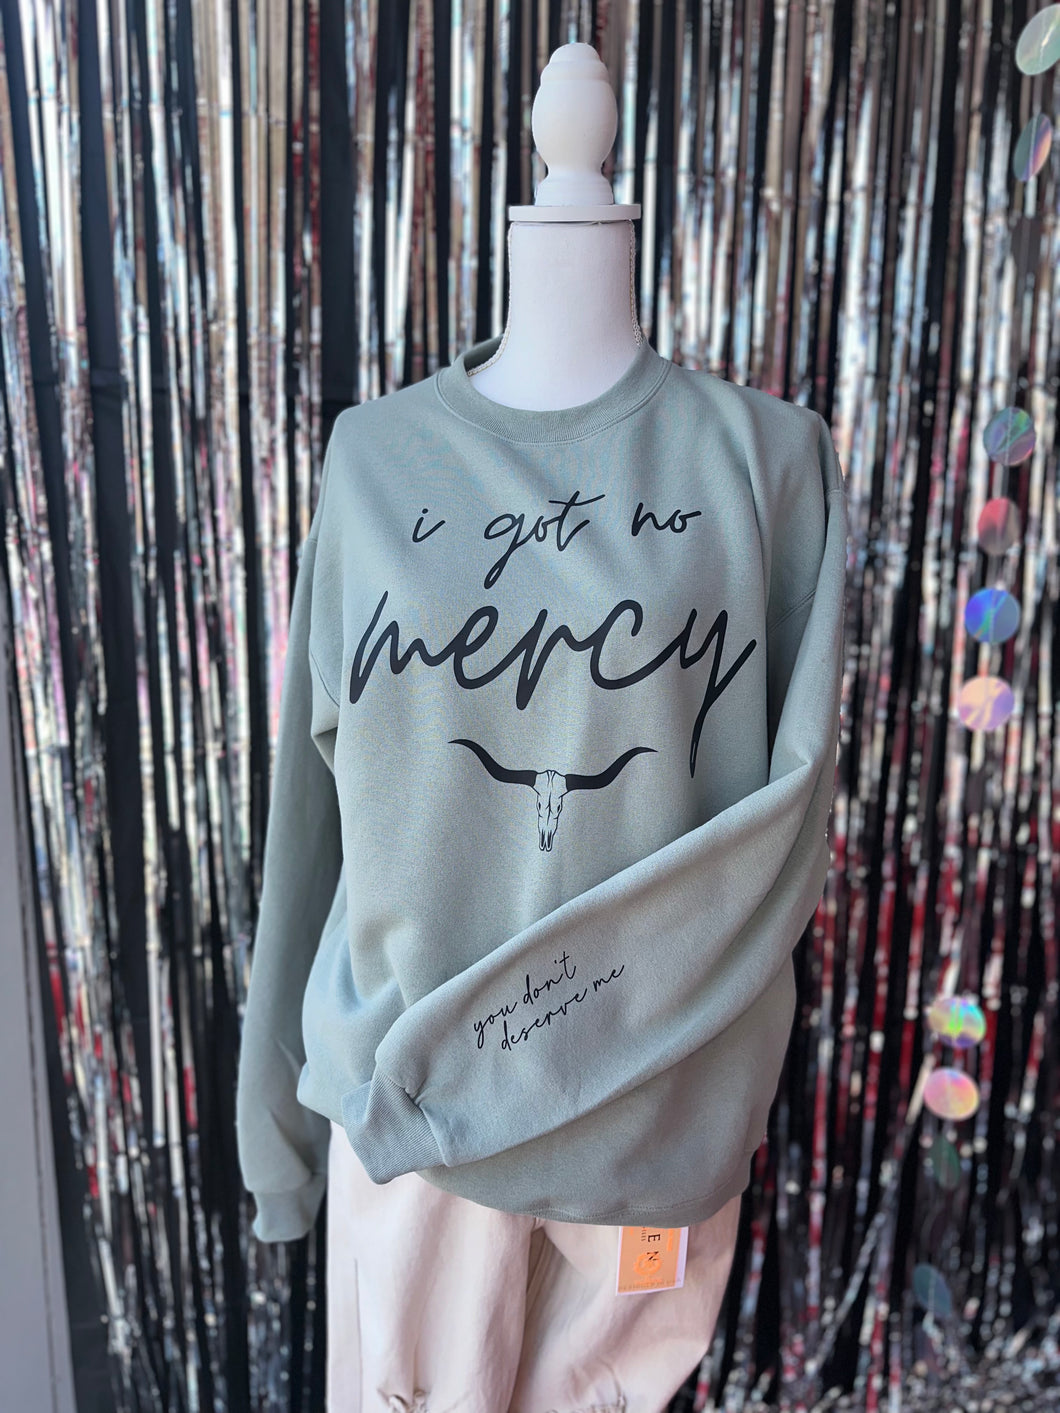 No Mercy Sweatshirt